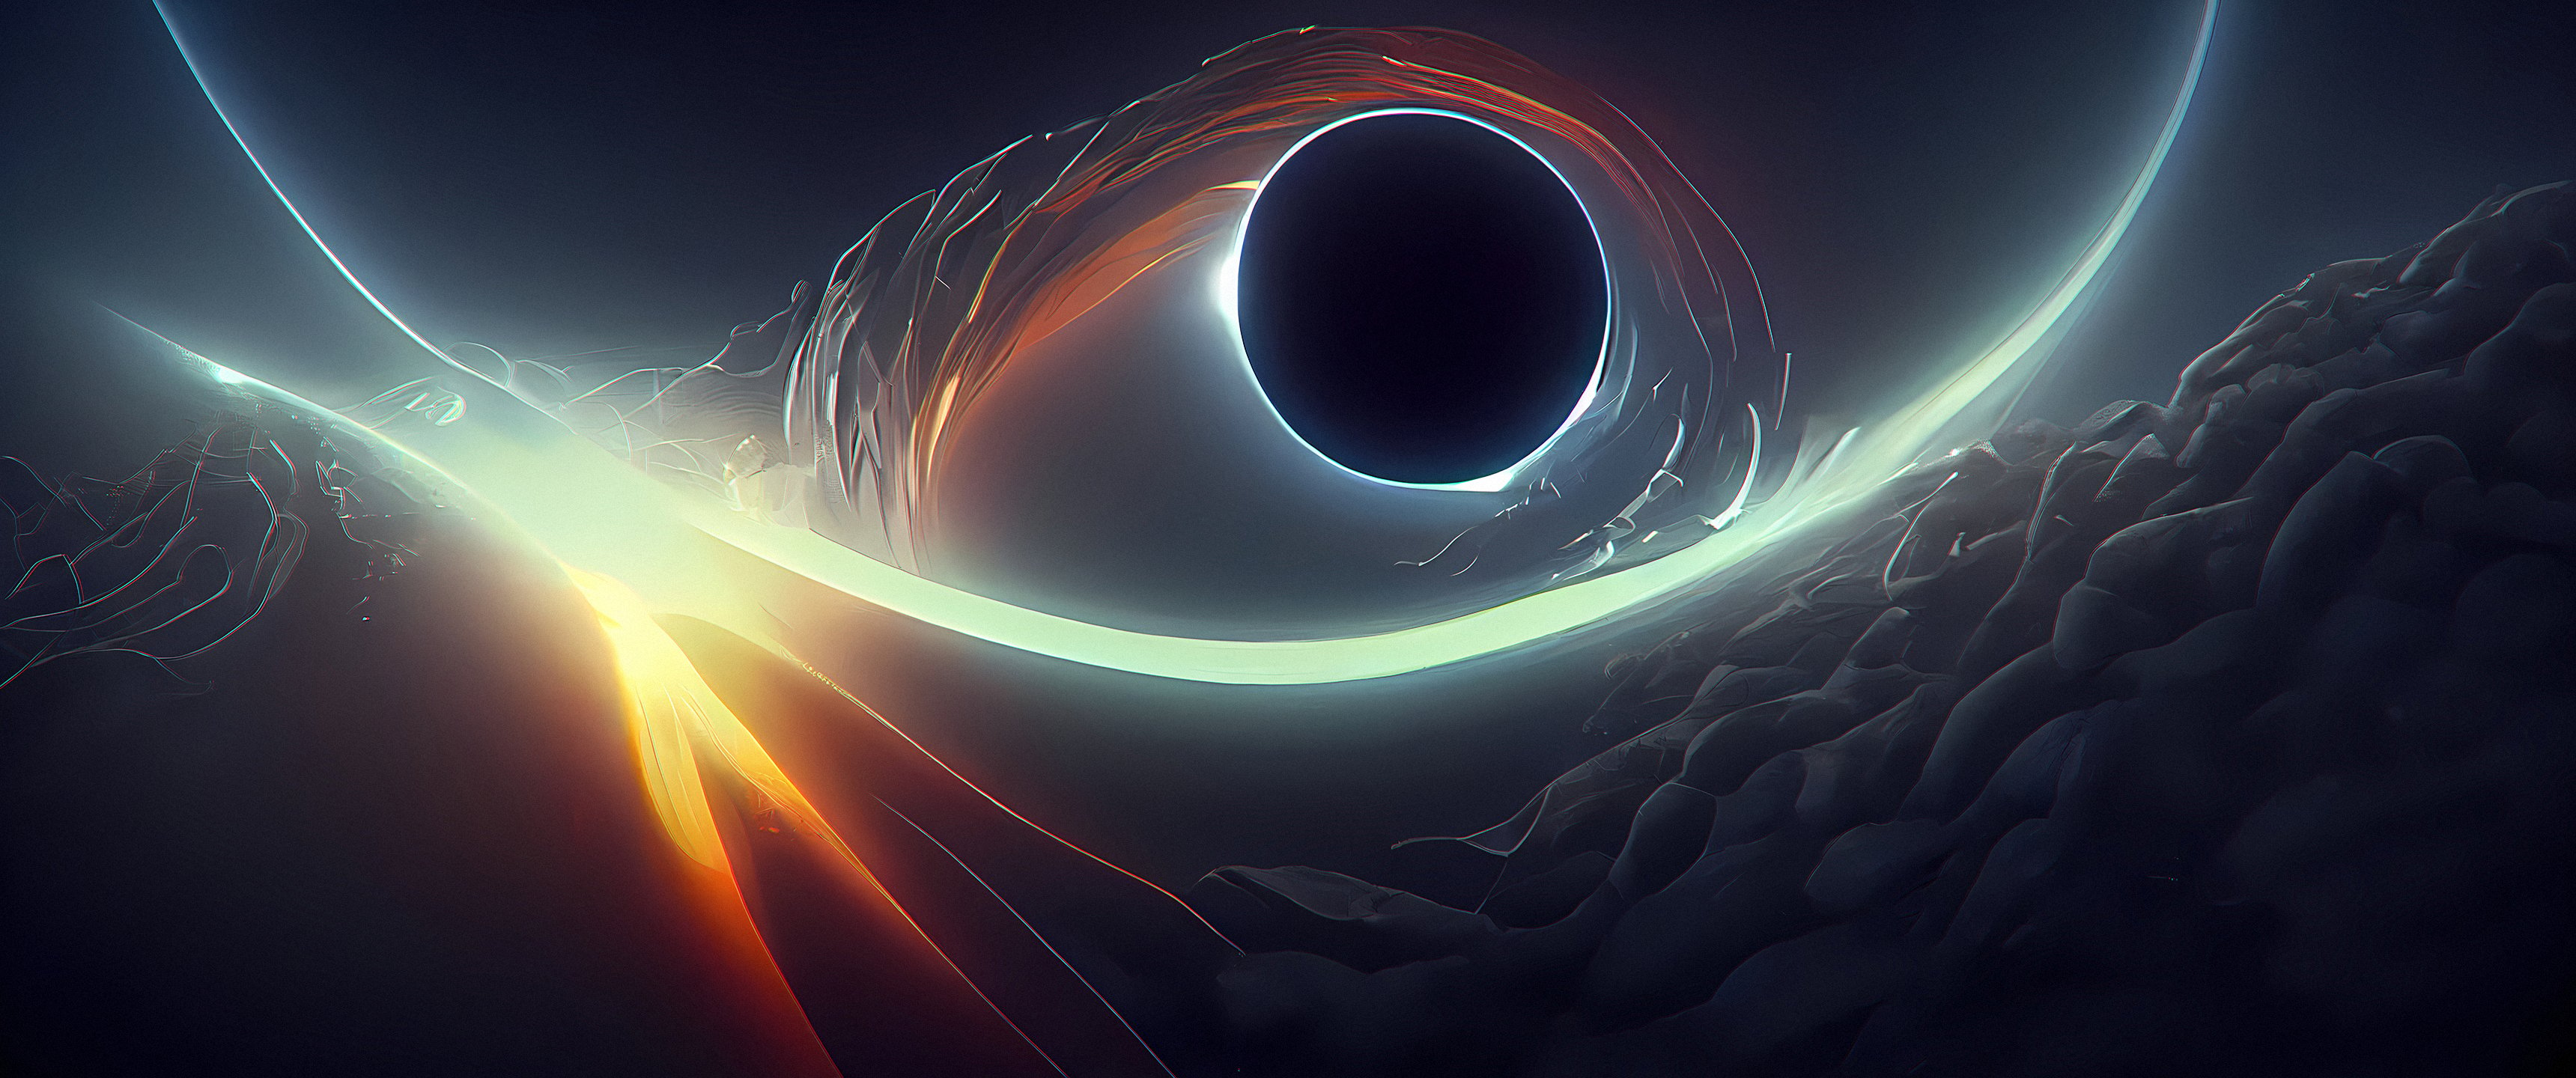 Ultrawide Artwork Event Horizon Black Holes Midjourney Ai Space Supermassive Black Hole Digital Art Wallpaper:3440x1440